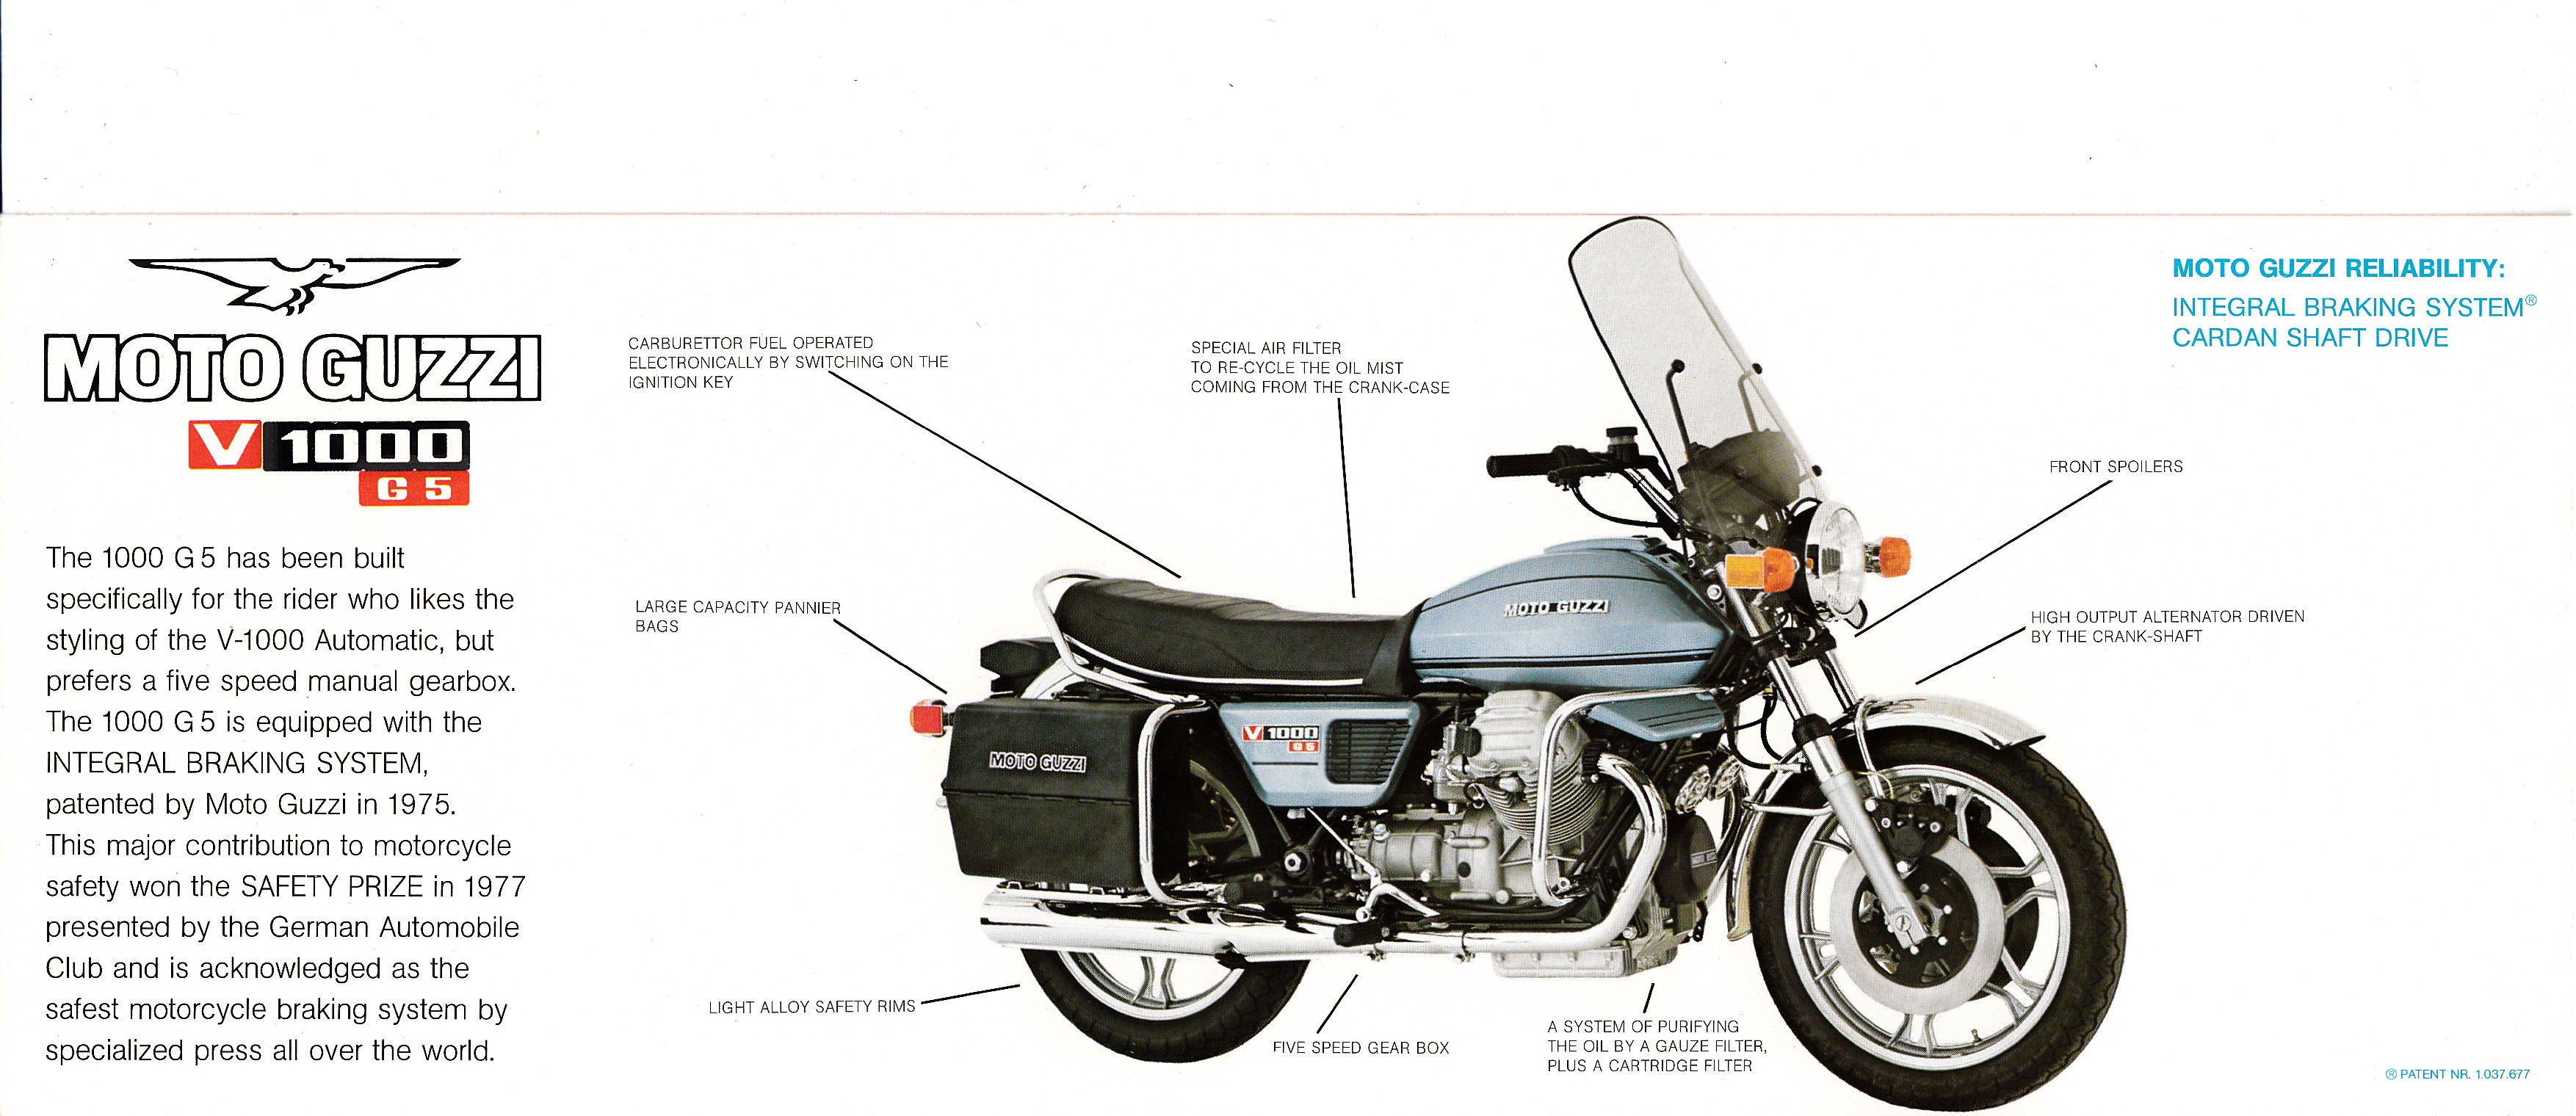 Brochure - Moto Guzzi V1000 G5 (folded style brochure)